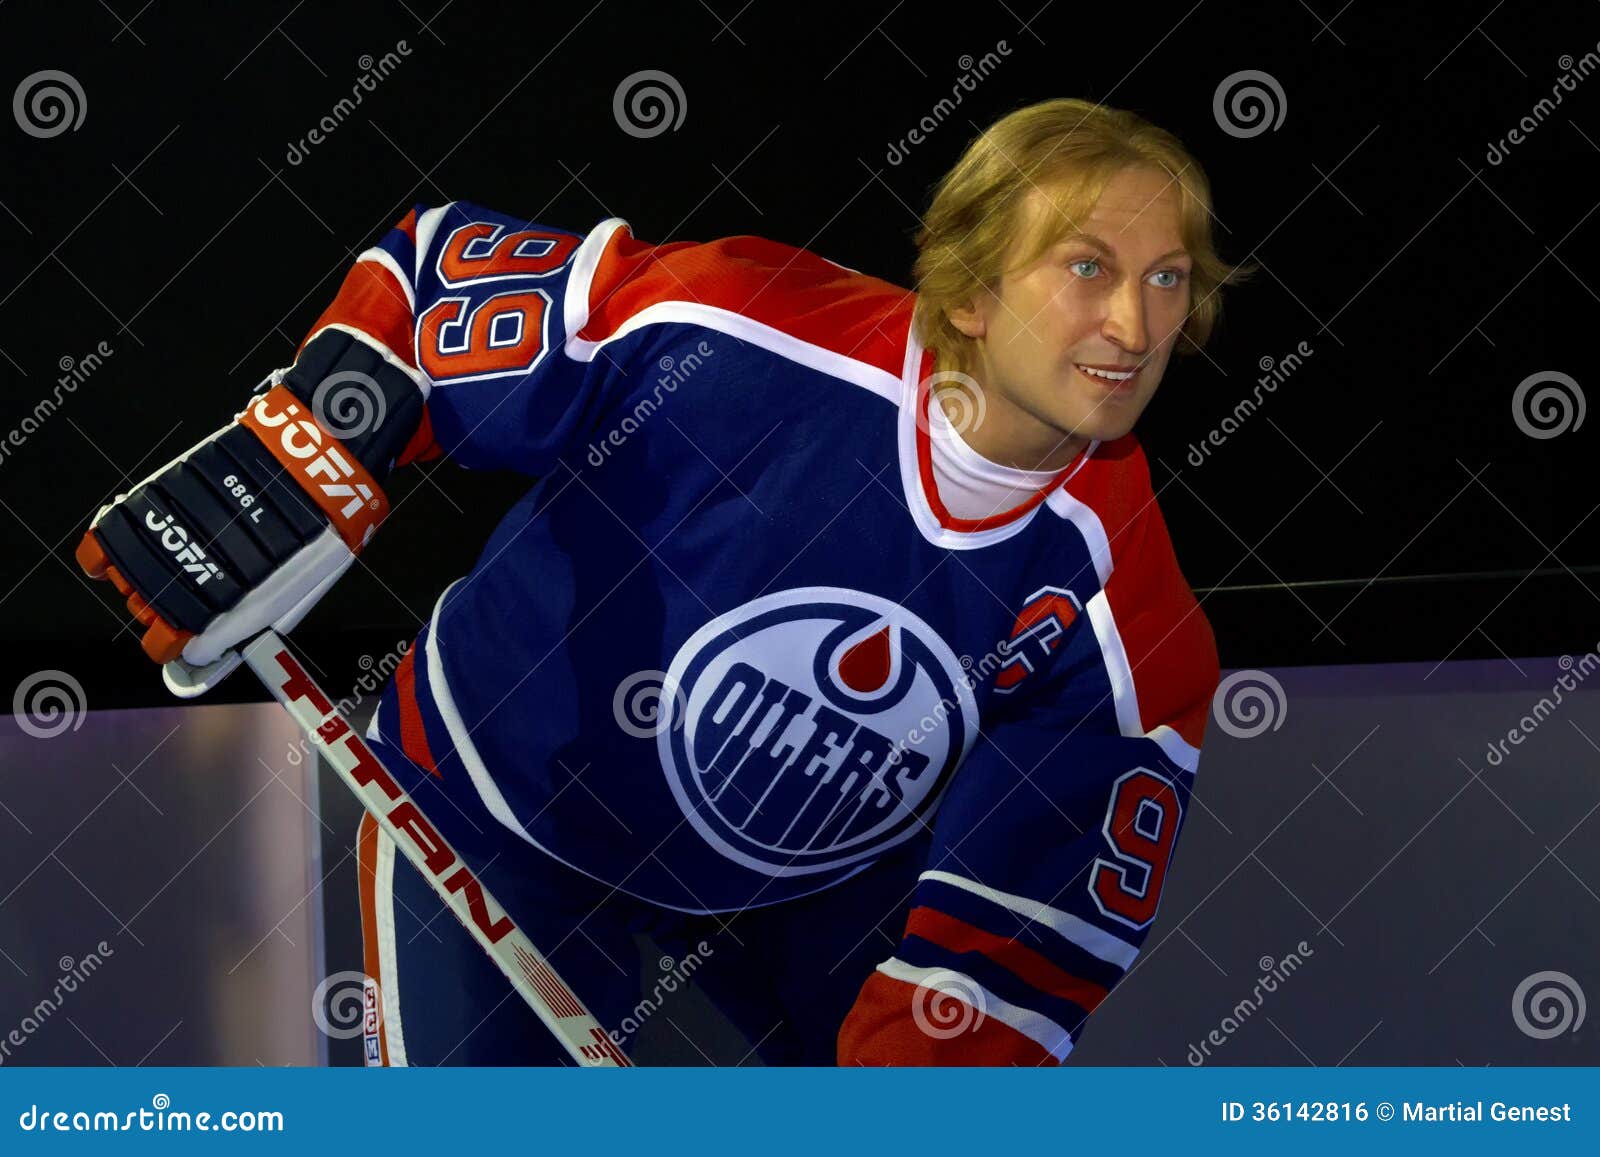 Wayne Gretzky: A Good Hockey Player